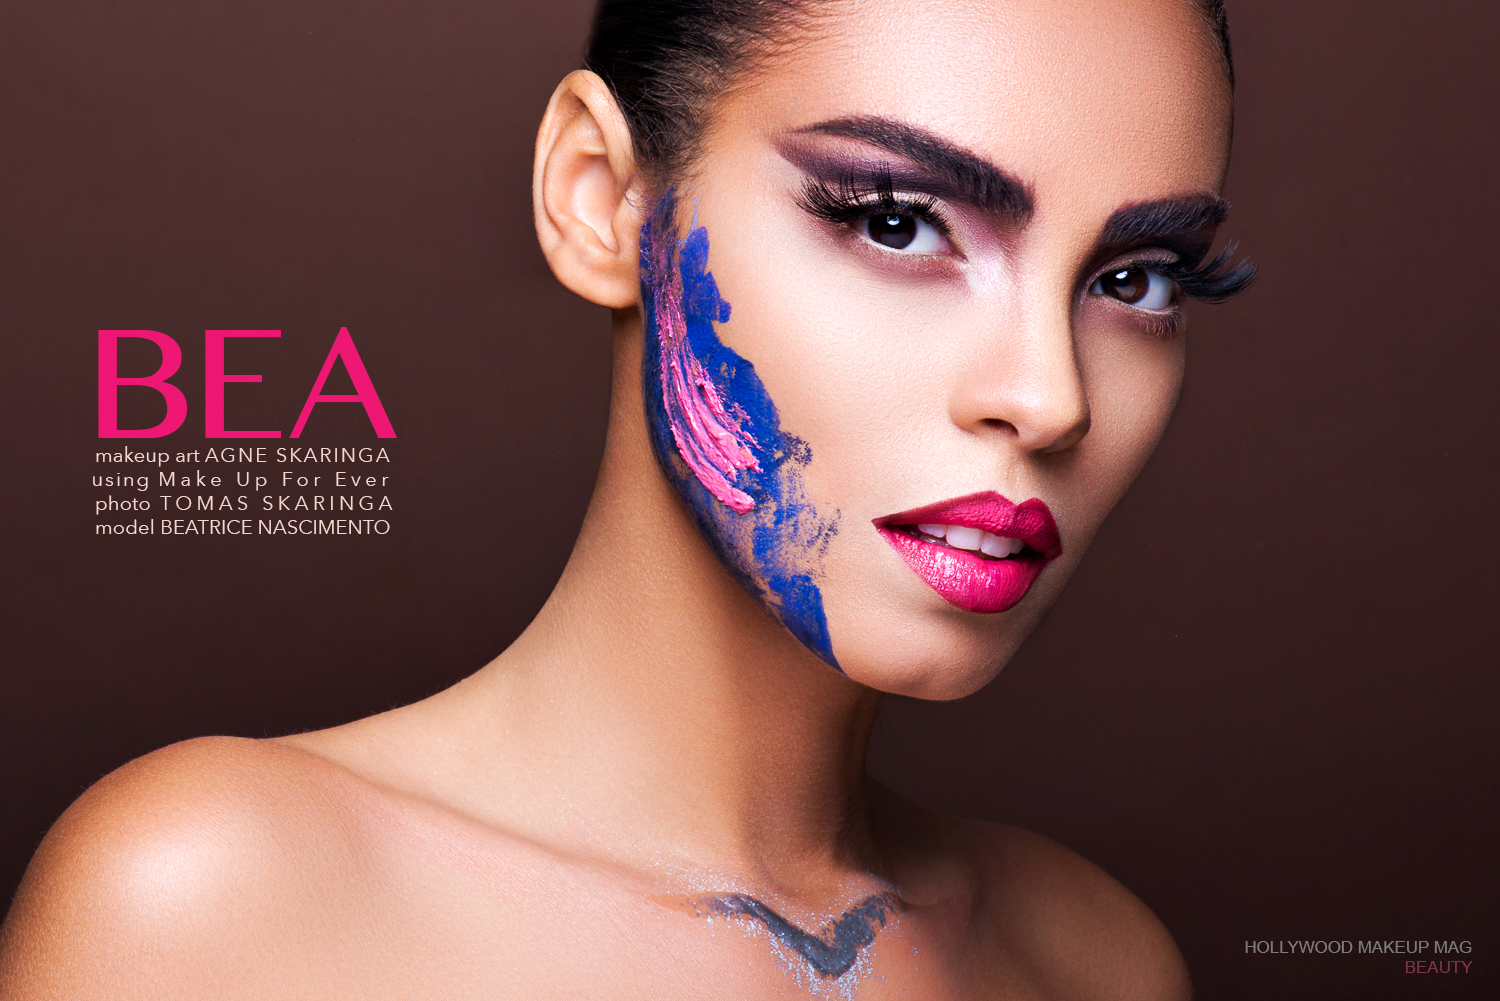 Hollywood makeup mag beauty makeup editorial colors Makeup For Ever Mufe Agne Skaringa Tomas.jpg